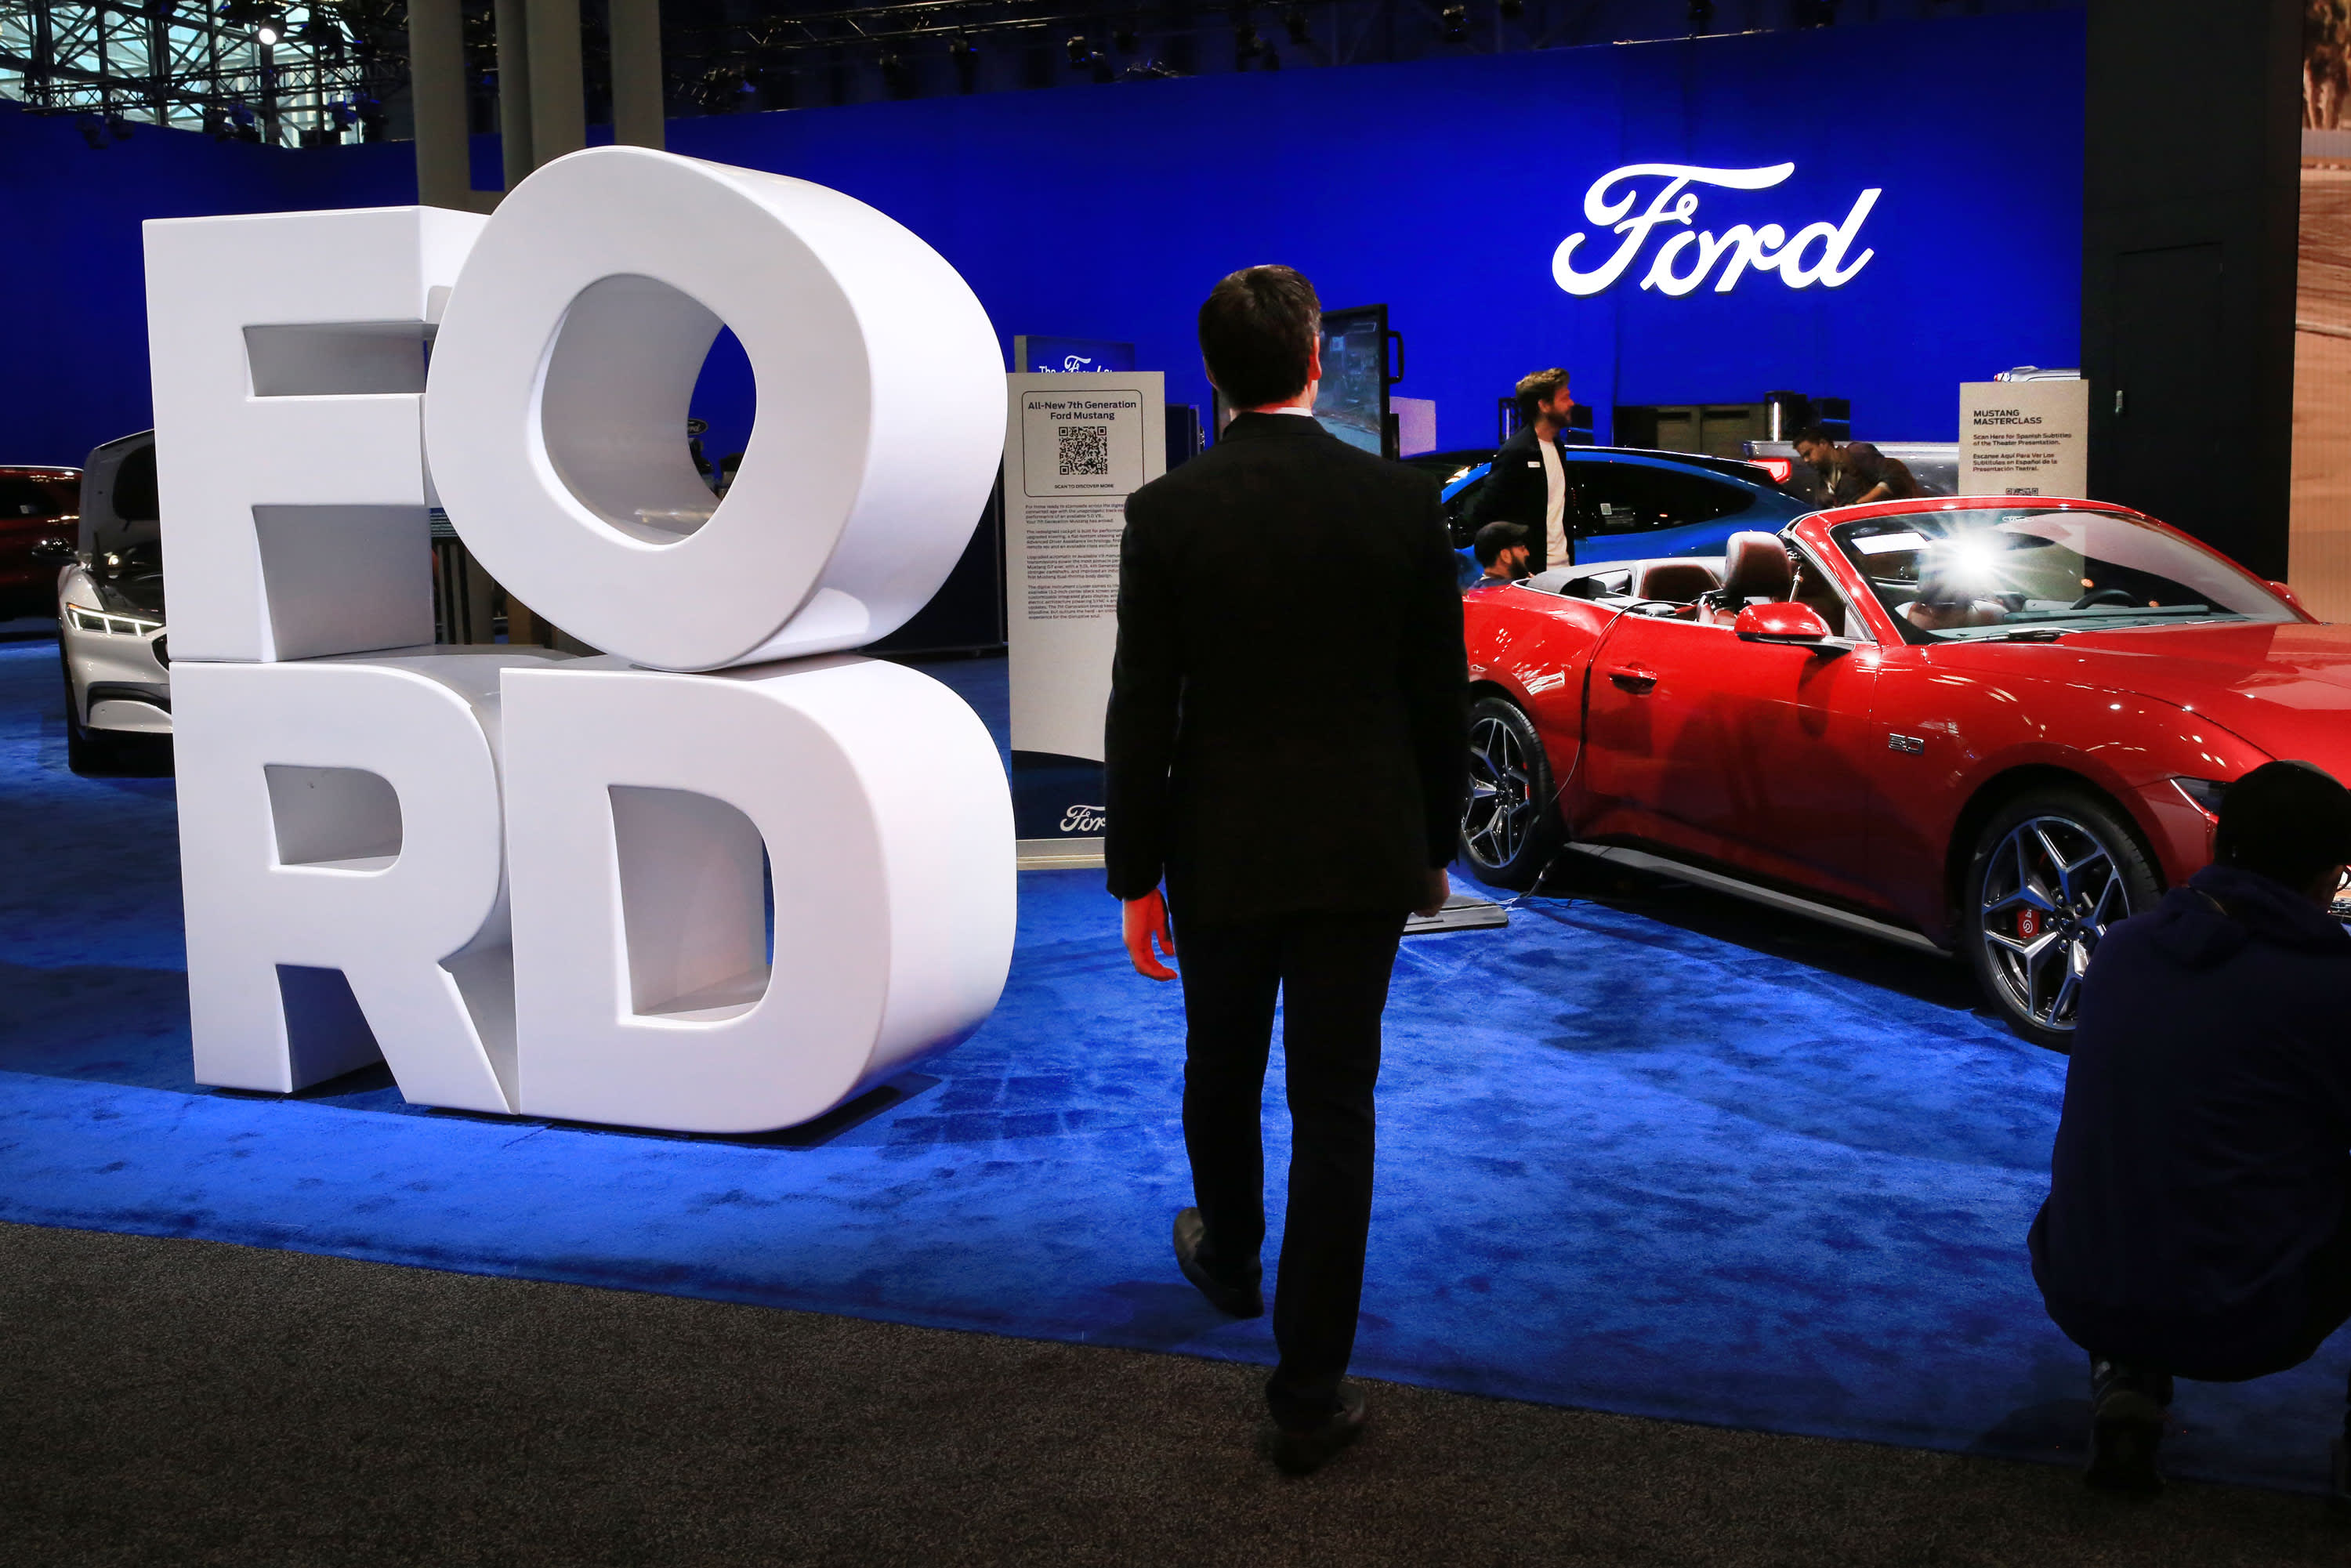 Jefferies downgrades Ford, cites concern around weak Model E guidance